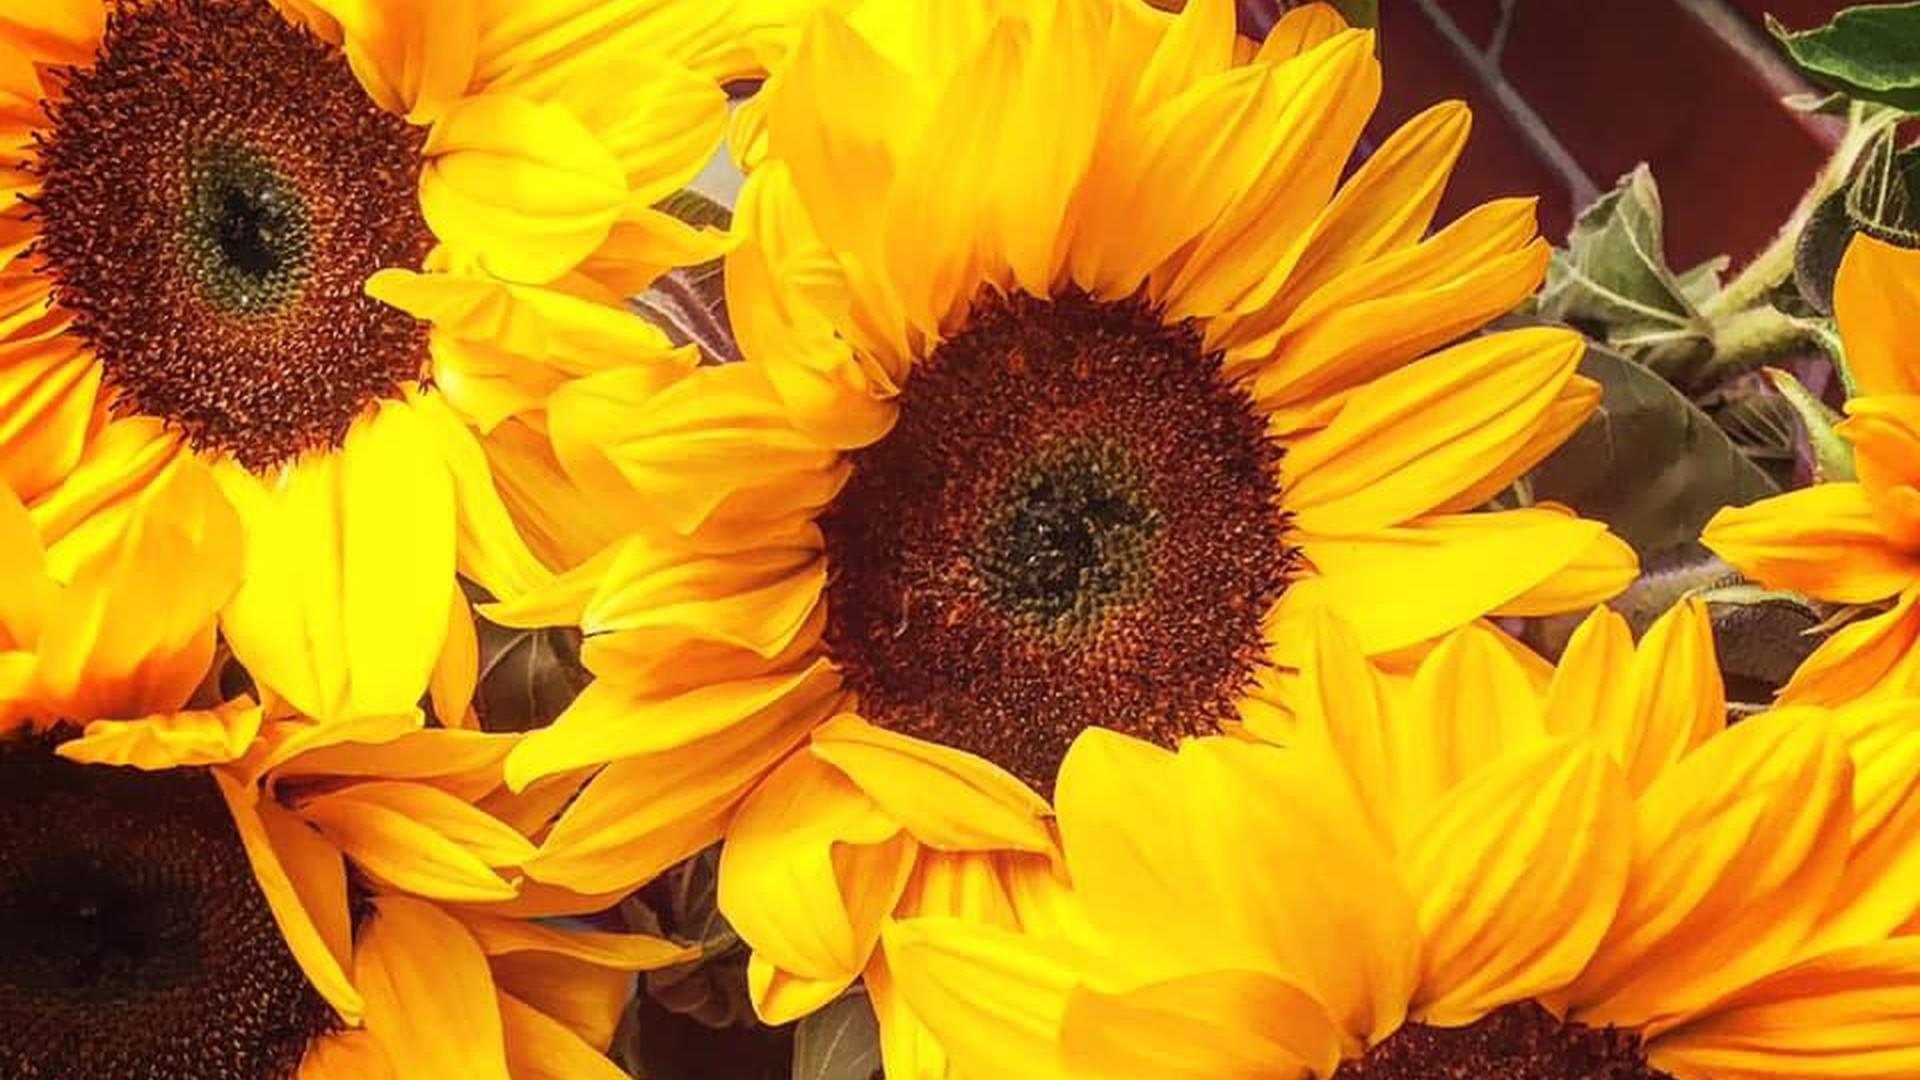 The Sunflower Network photo